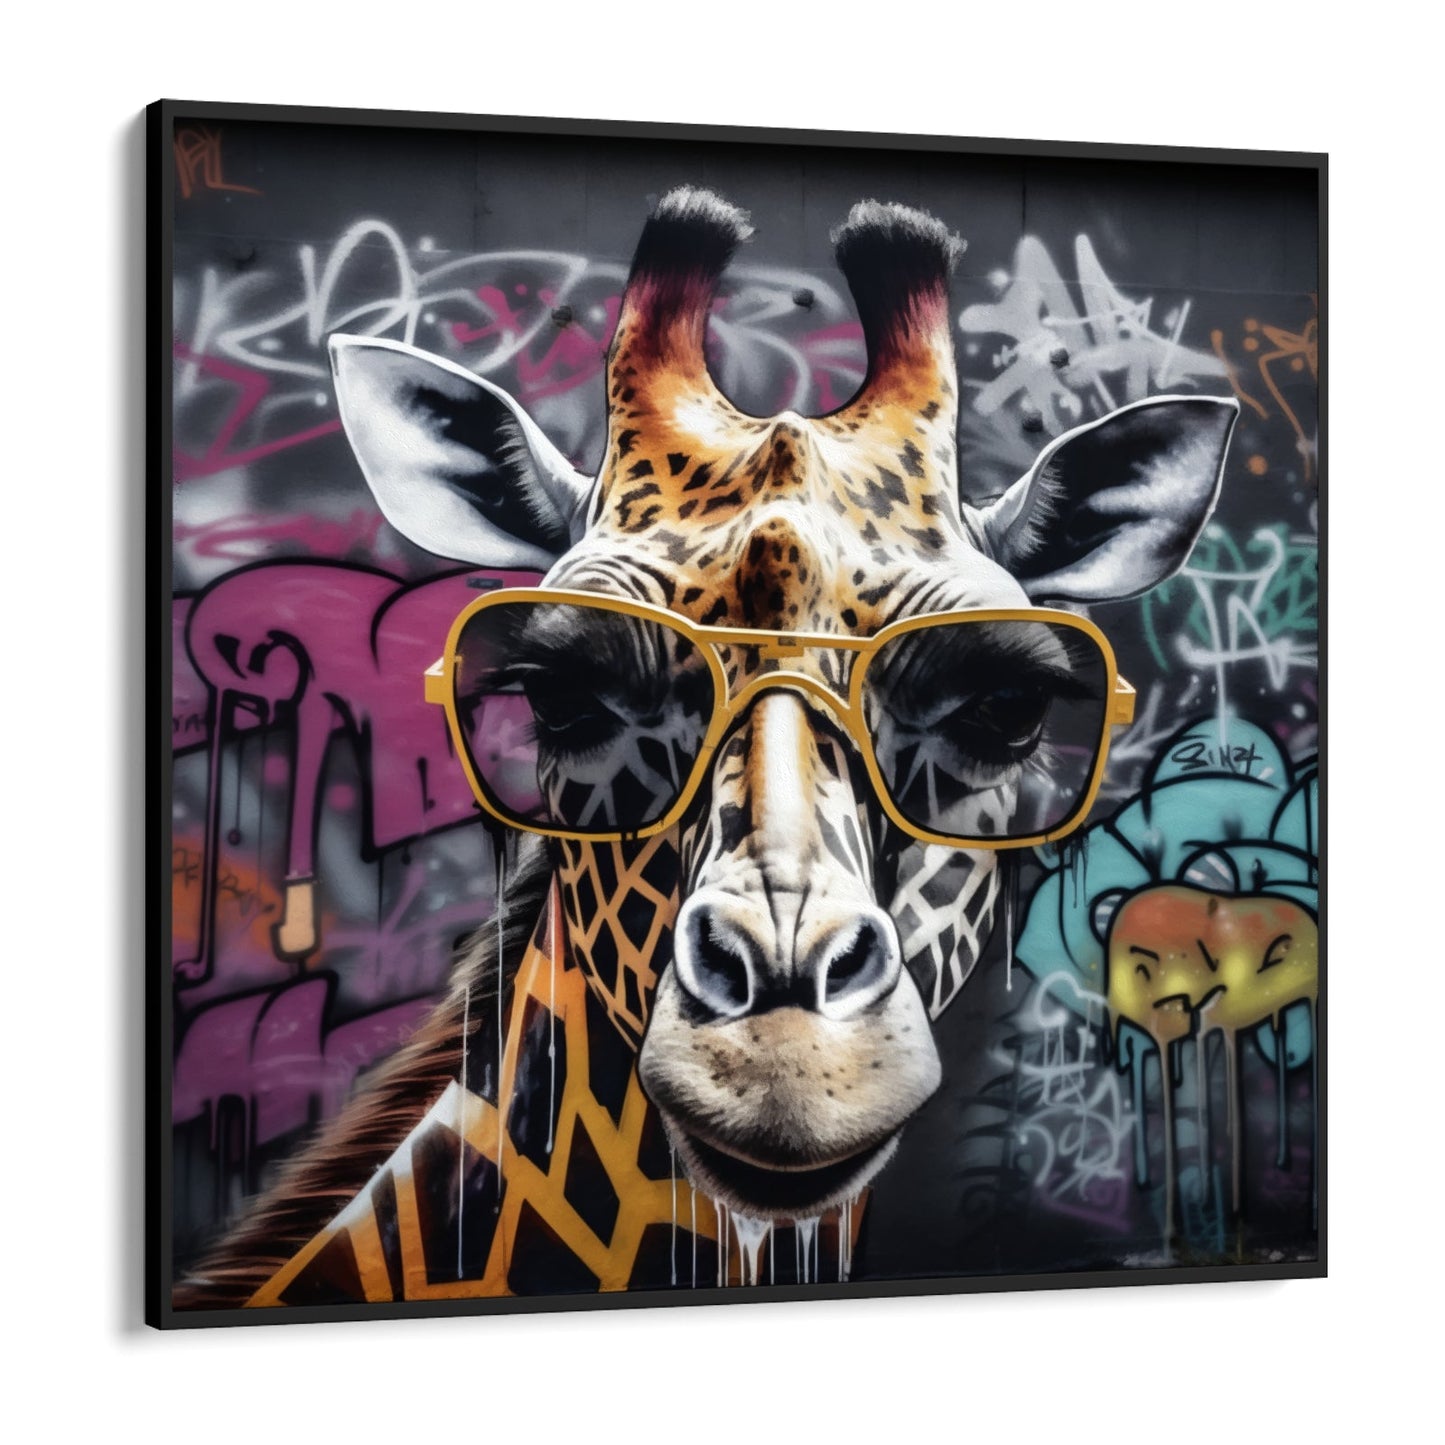 Girafe graffiti